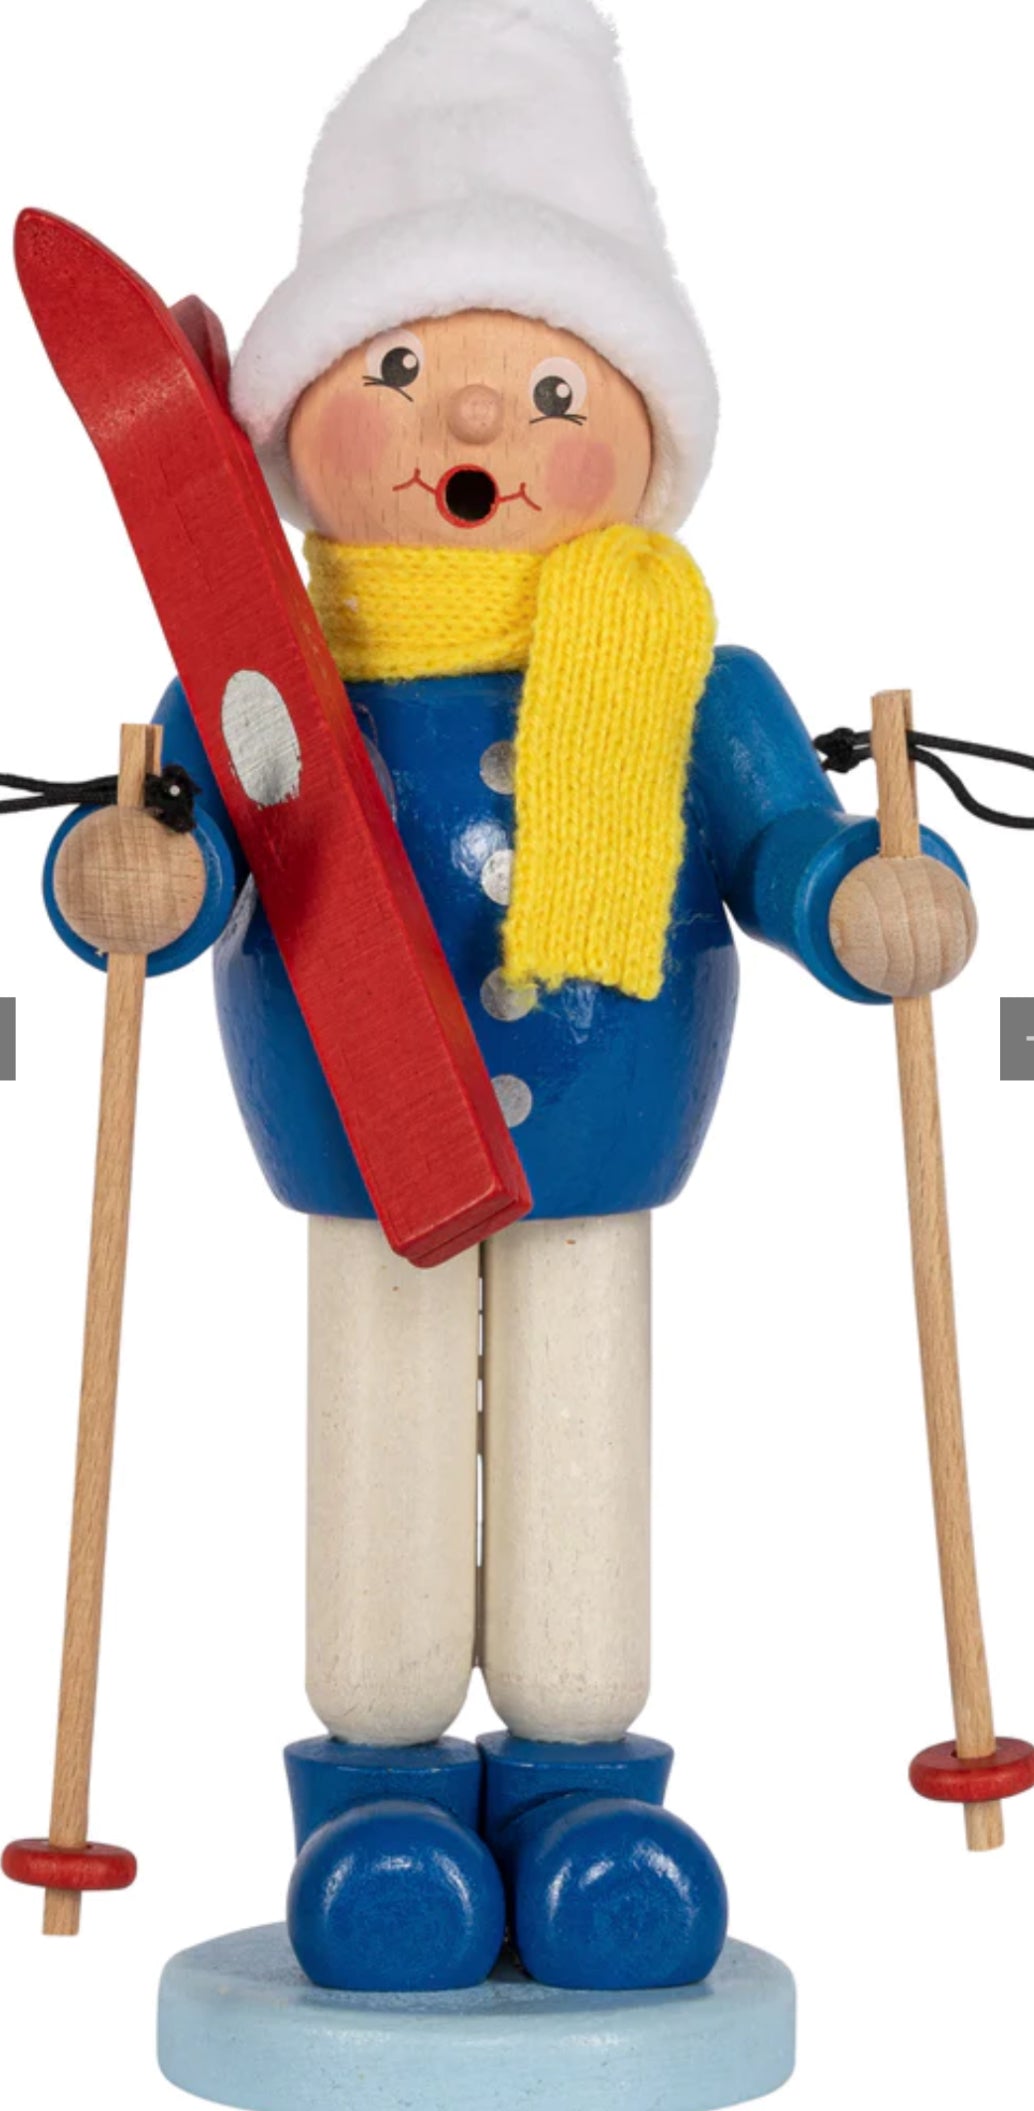 Saico Räucherfigur 'Junge mit Ski'